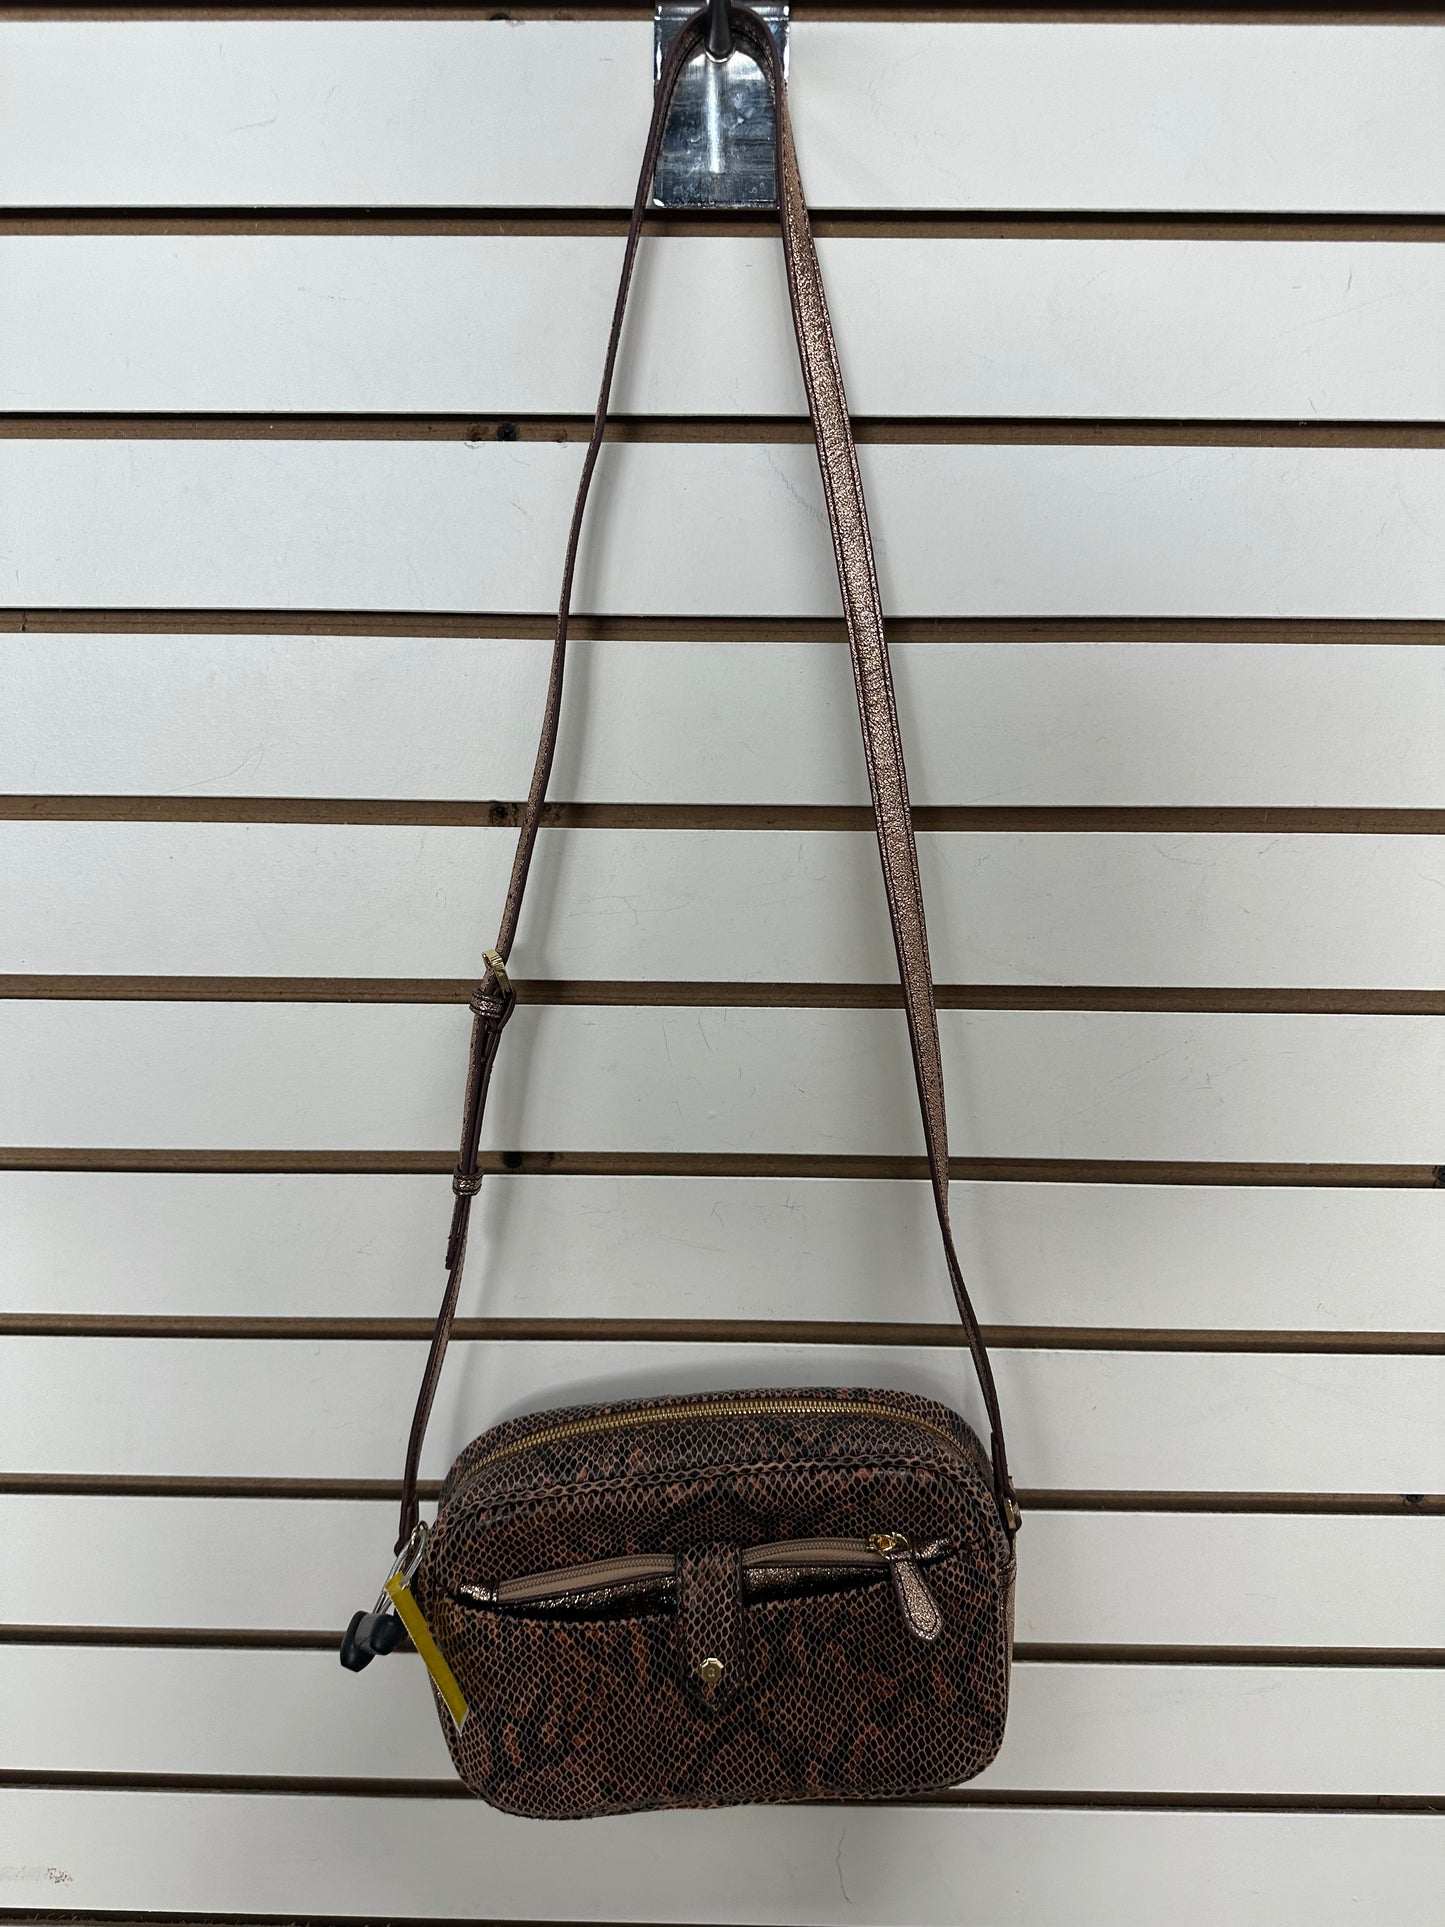 Handbag Leather By Gilli  Size: Large